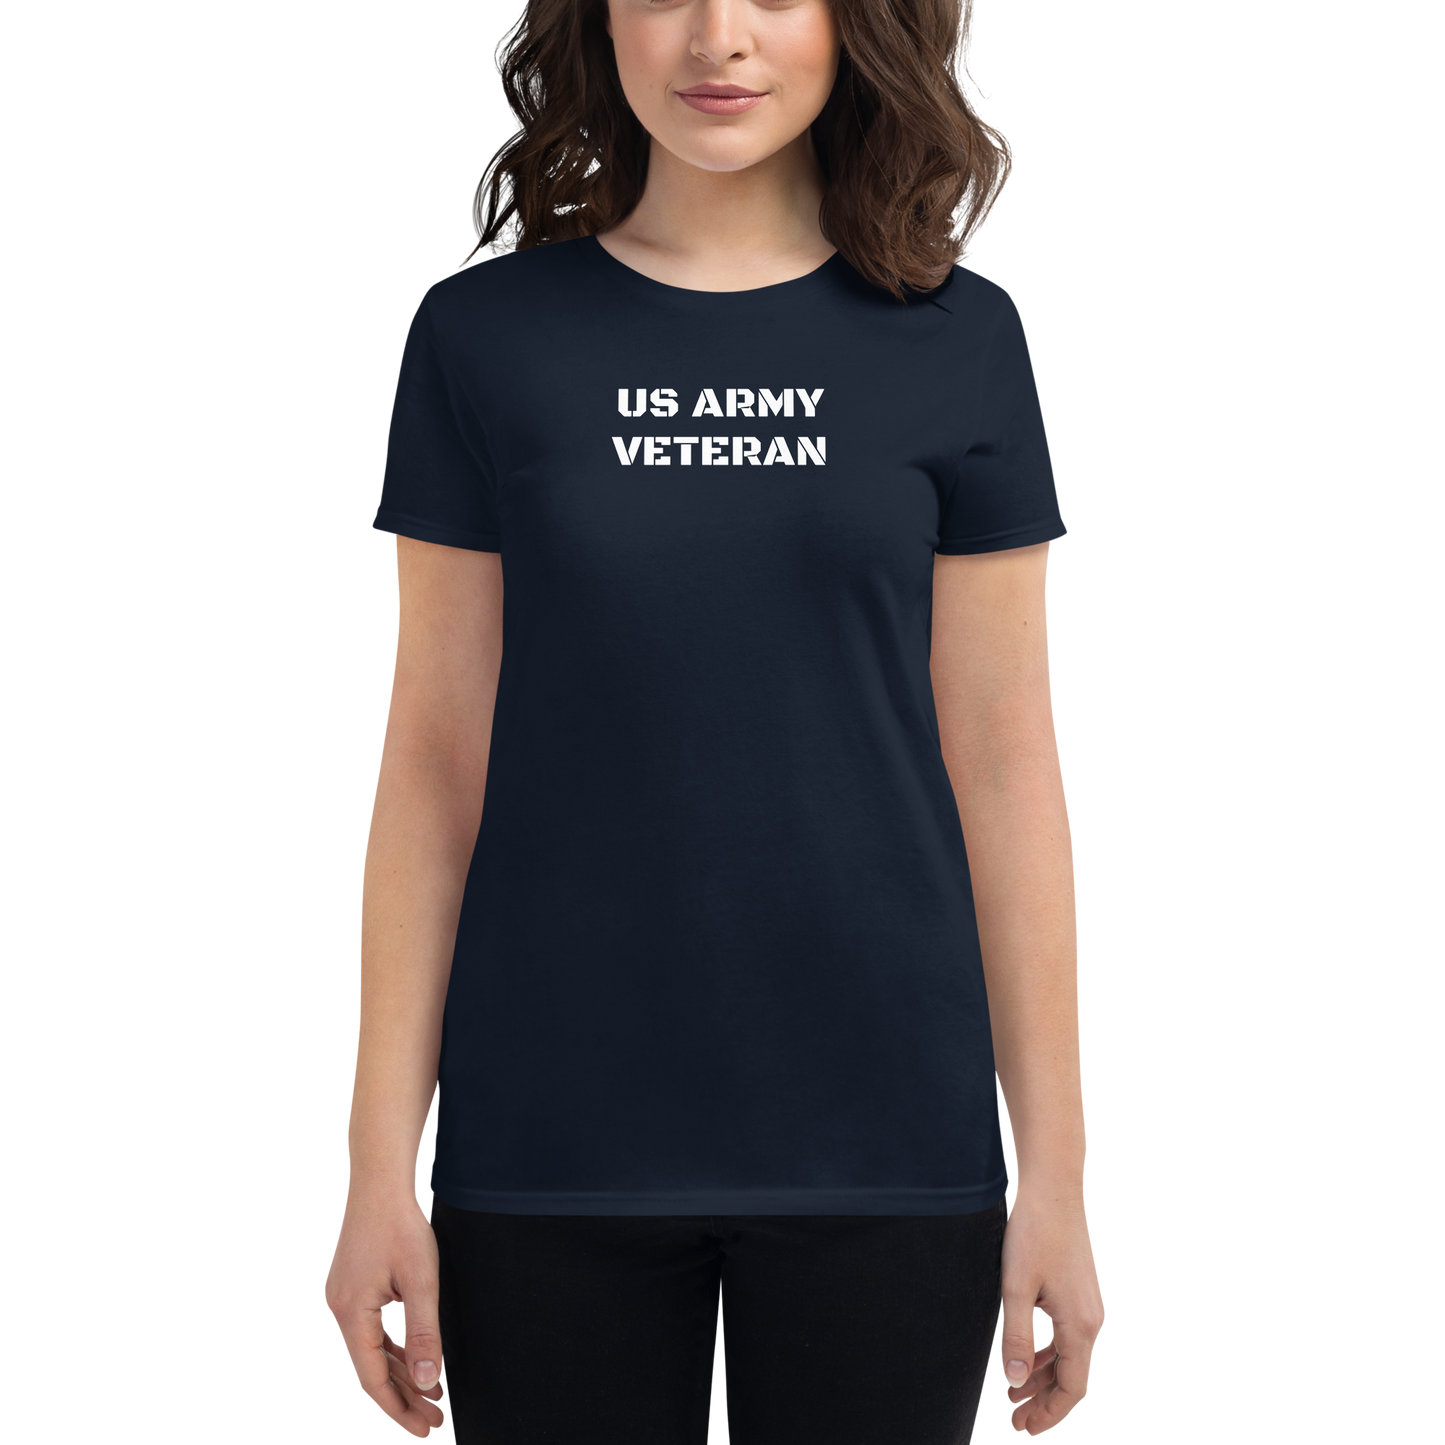 Honor Bound Gear "Army Veteran" Women's T-Shirt